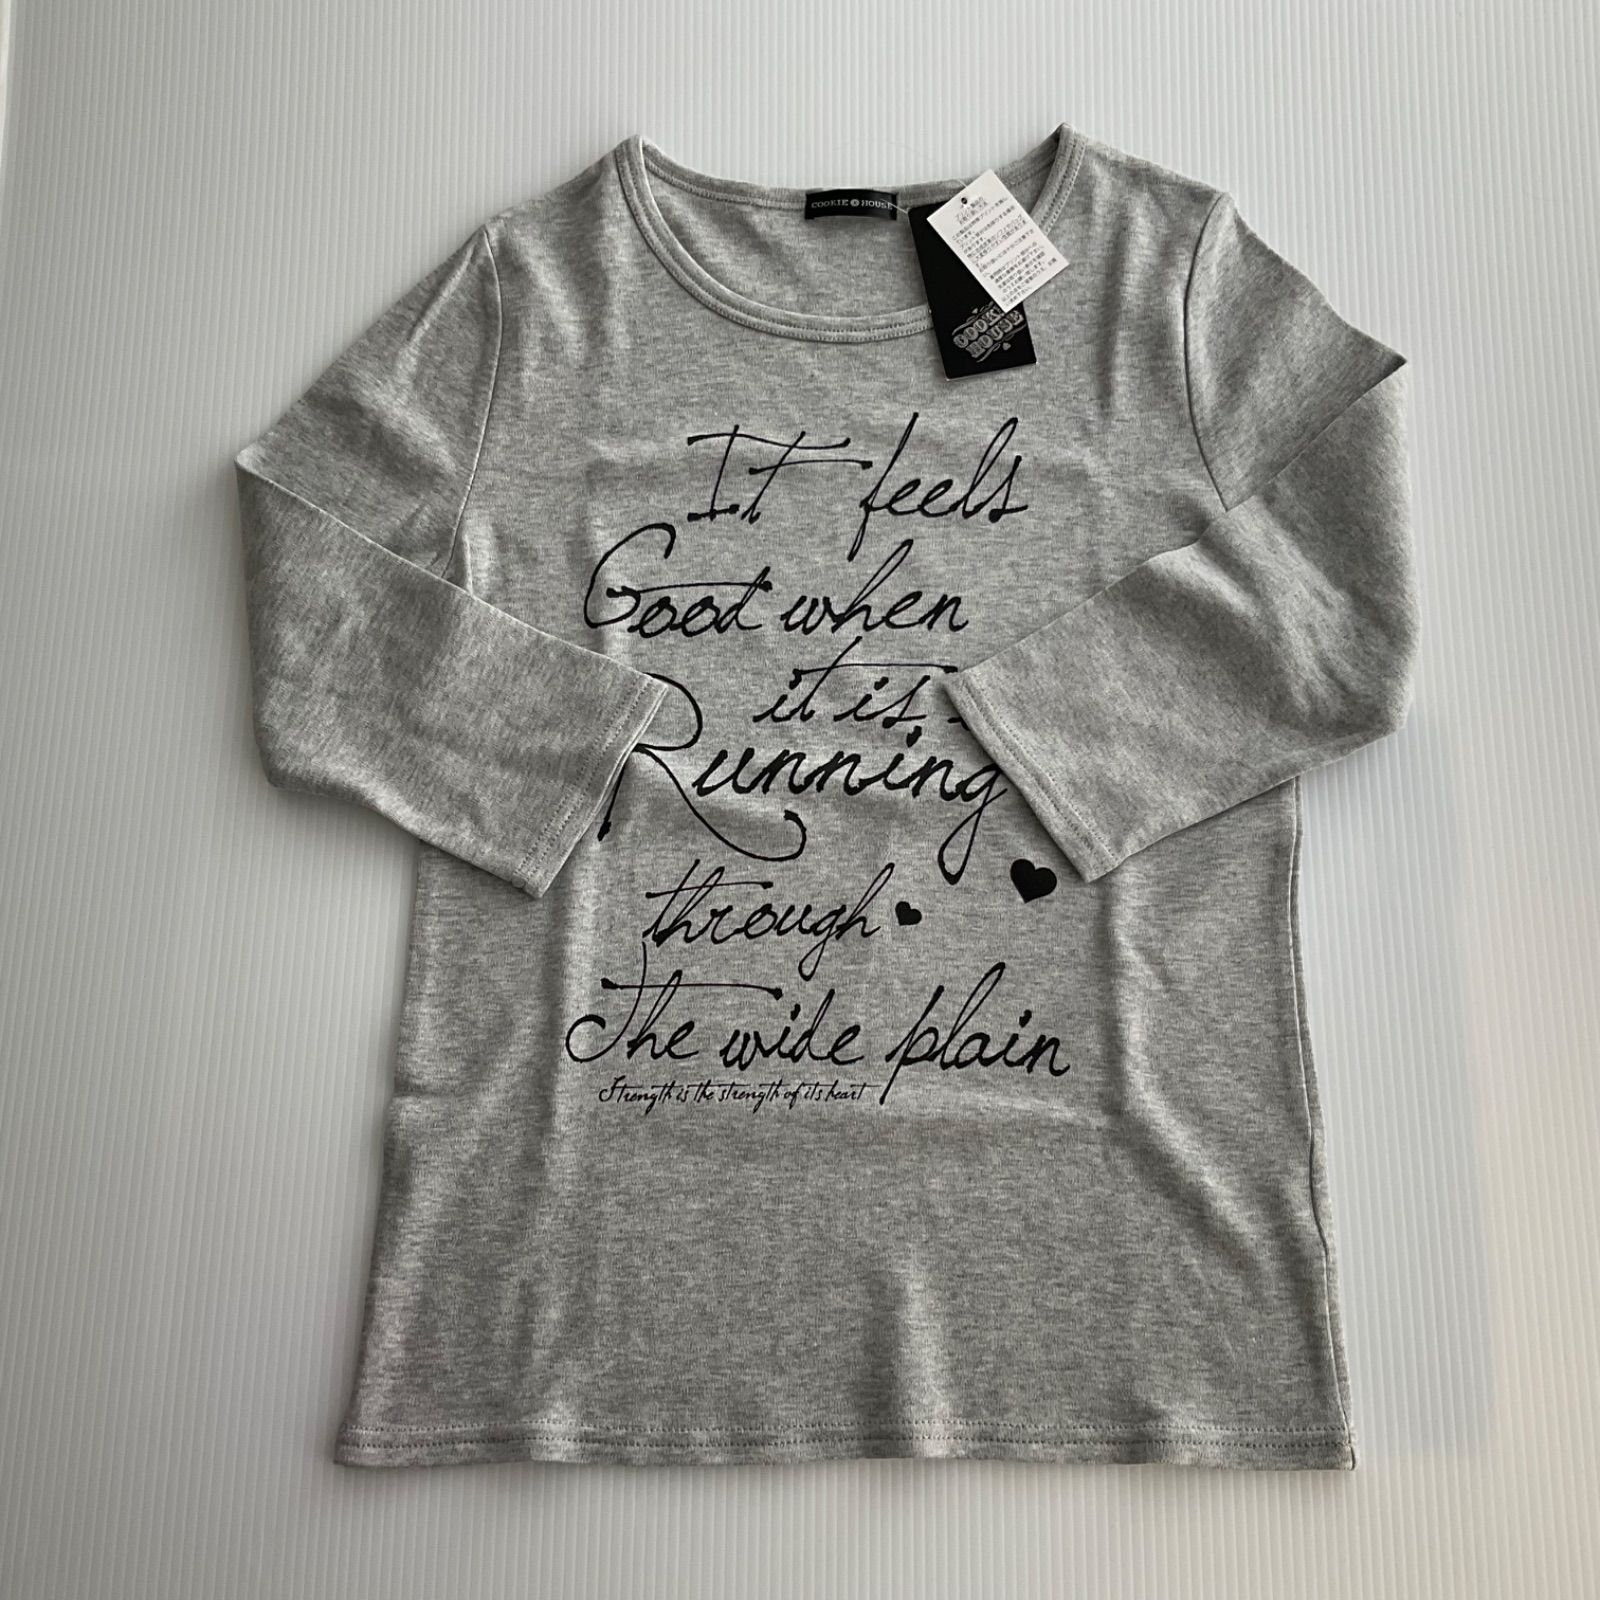 COOKIE HOUSEのプリントTシャツ(グレー) - すずらん - メルカリ